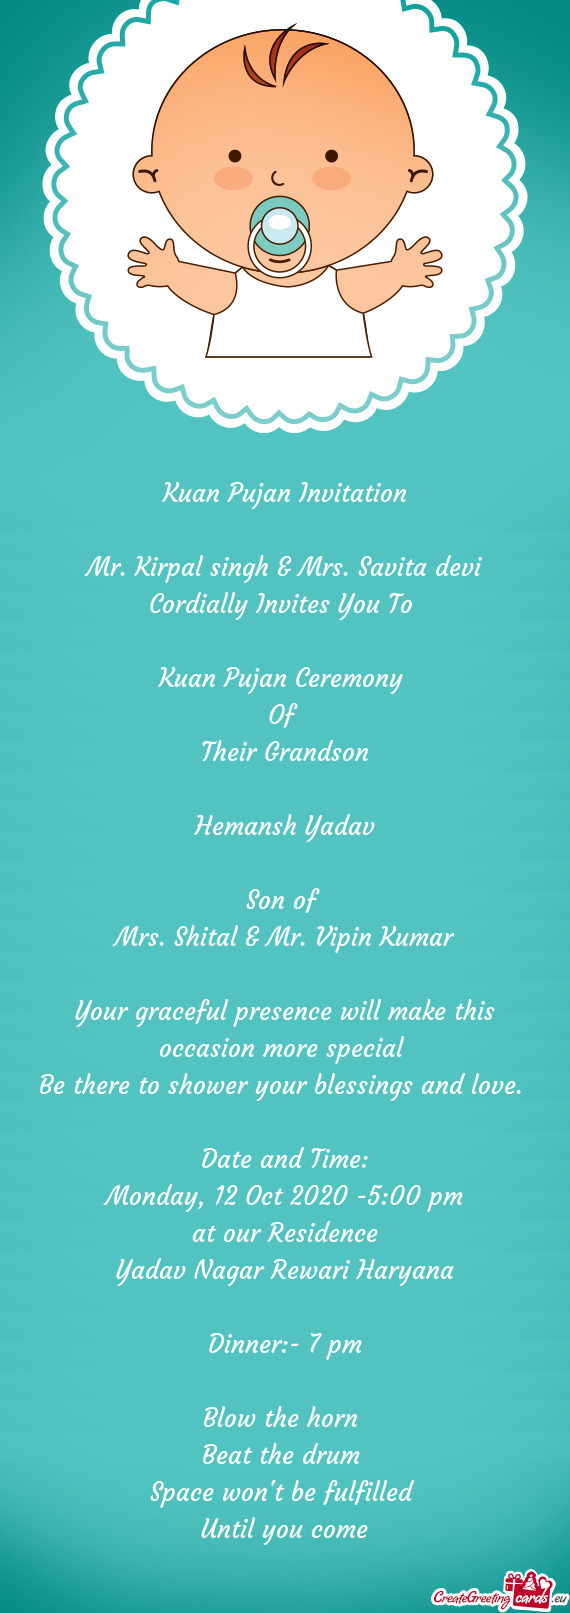 Mr. Kirpal singh & Mrs. Savita devi